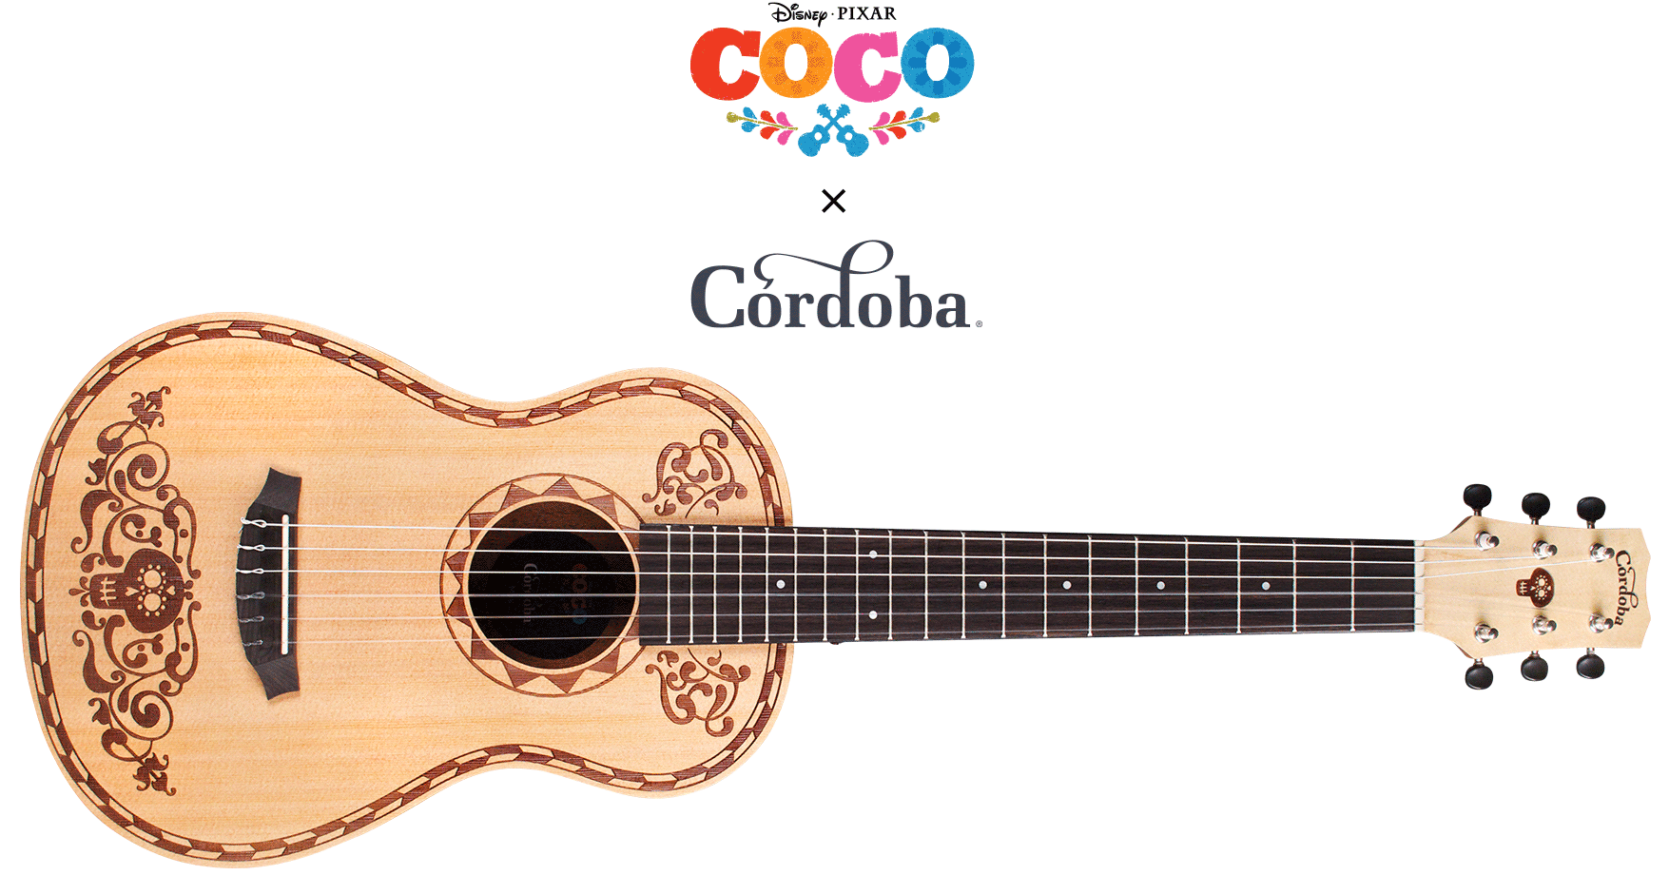 Coco Guitar clipart PNG Immagine di immagine